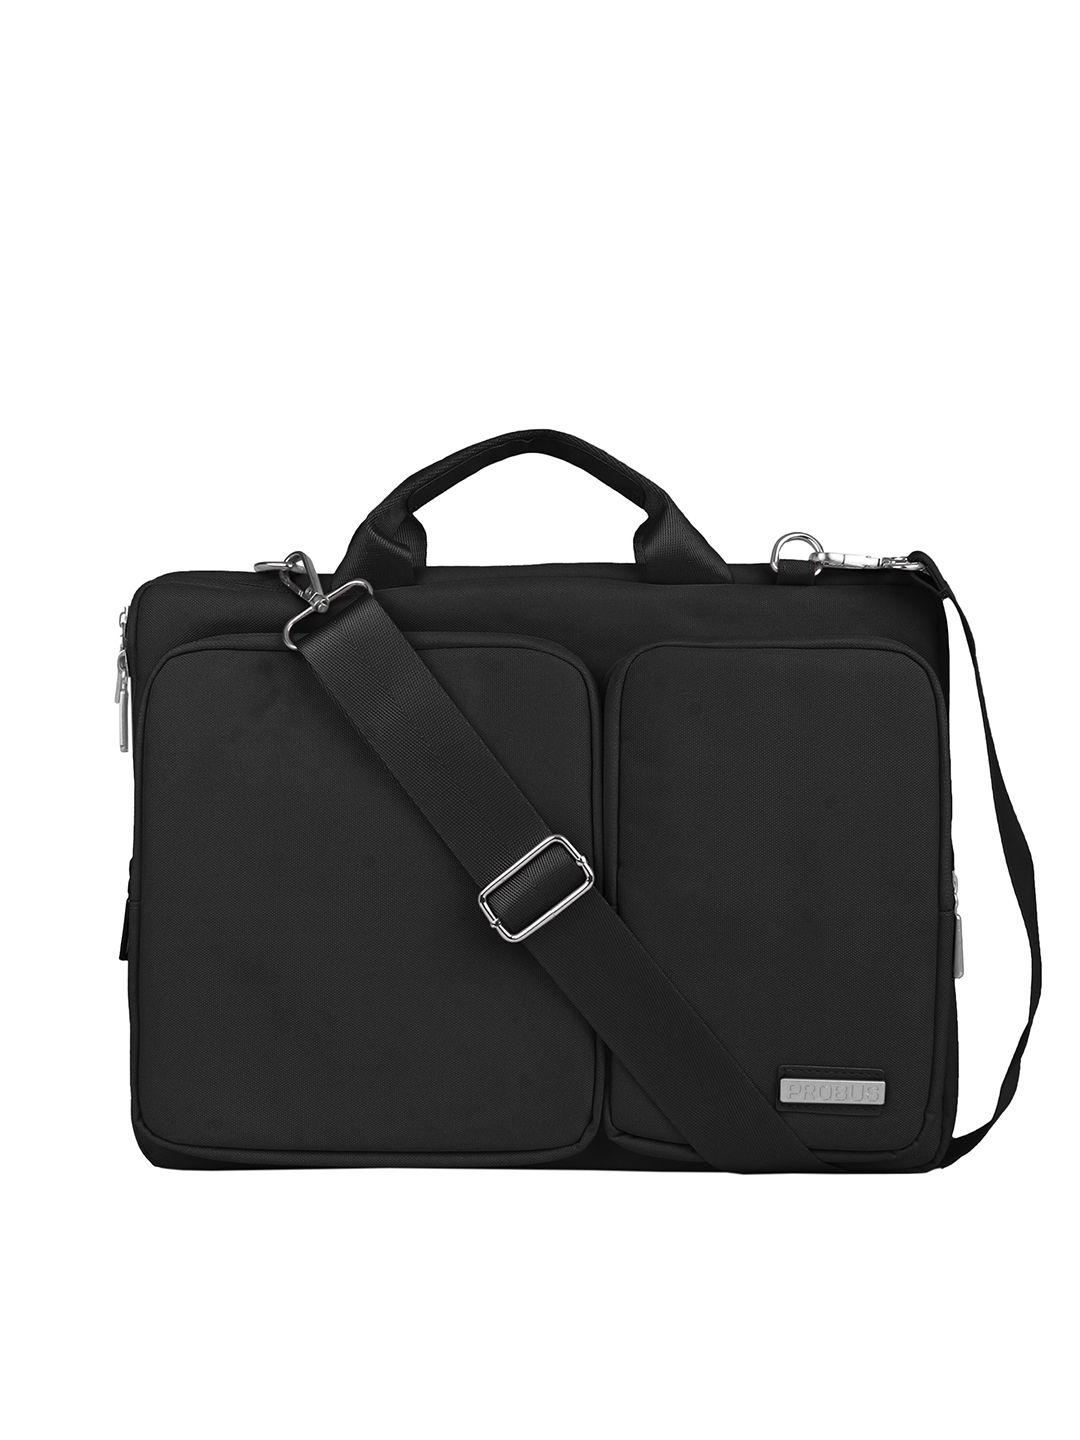 probus unisex black & silver-toned laptop bag